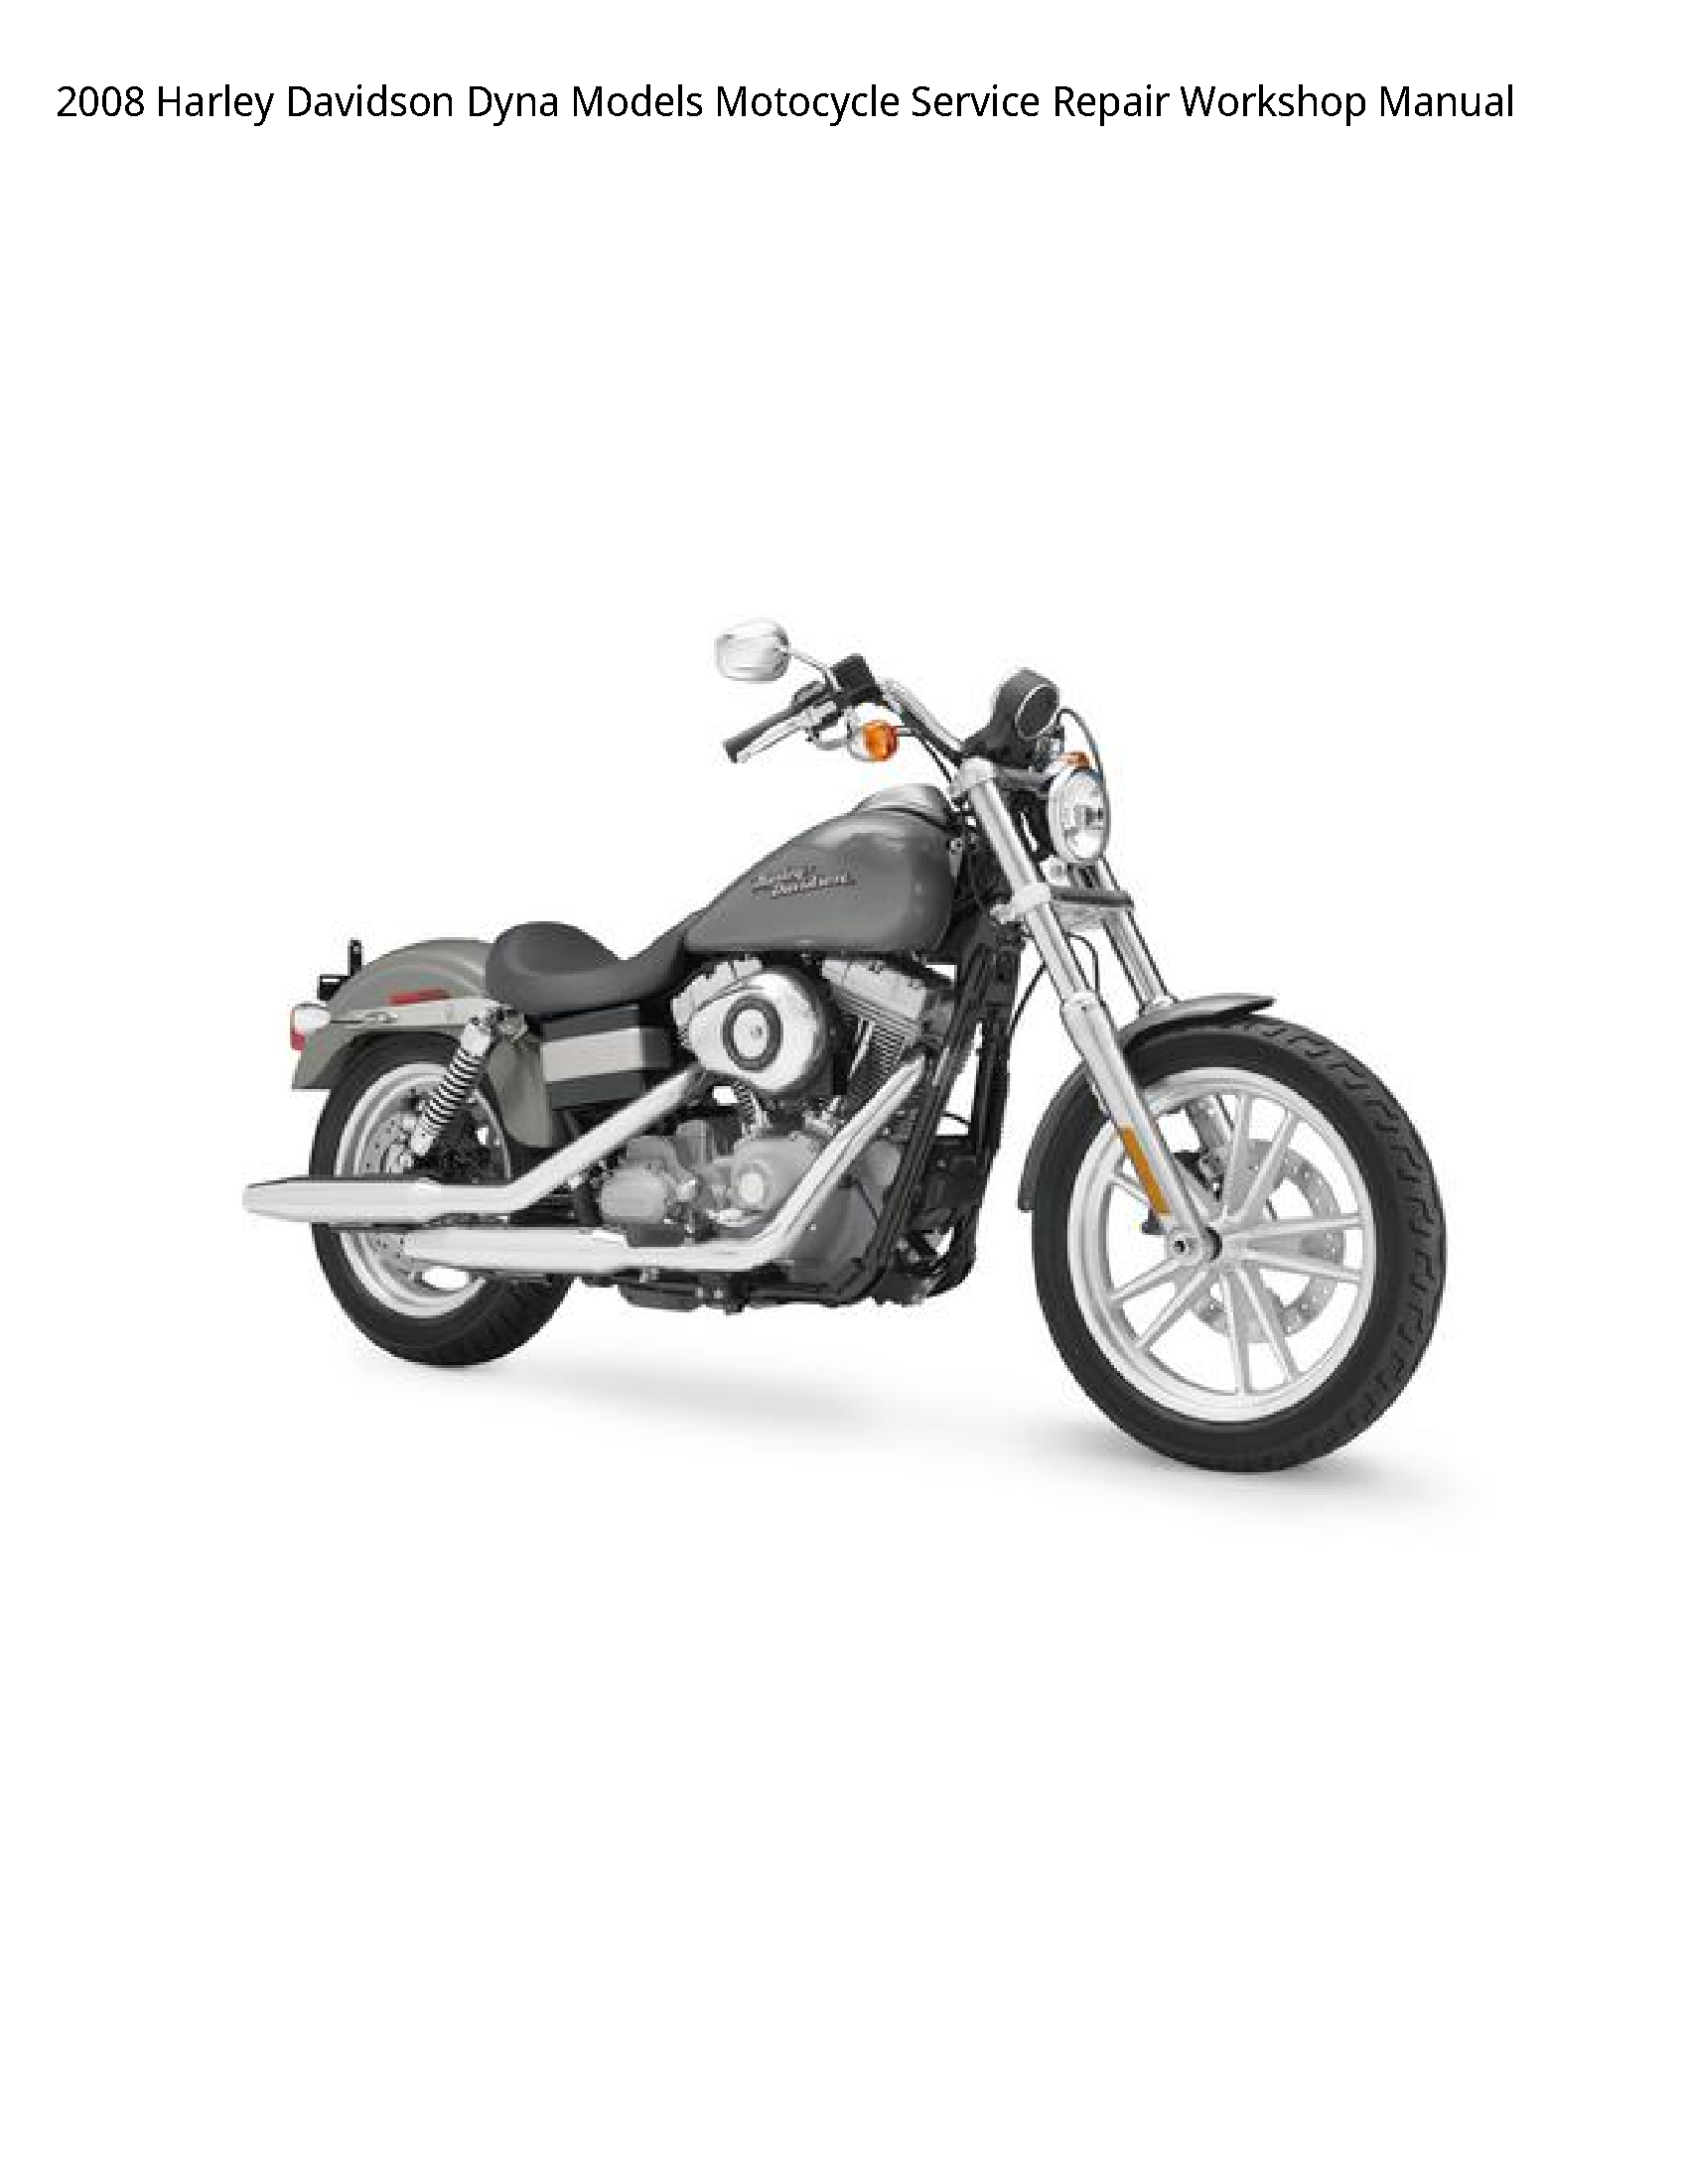 Harley Davidson Dyna Motocycle manual